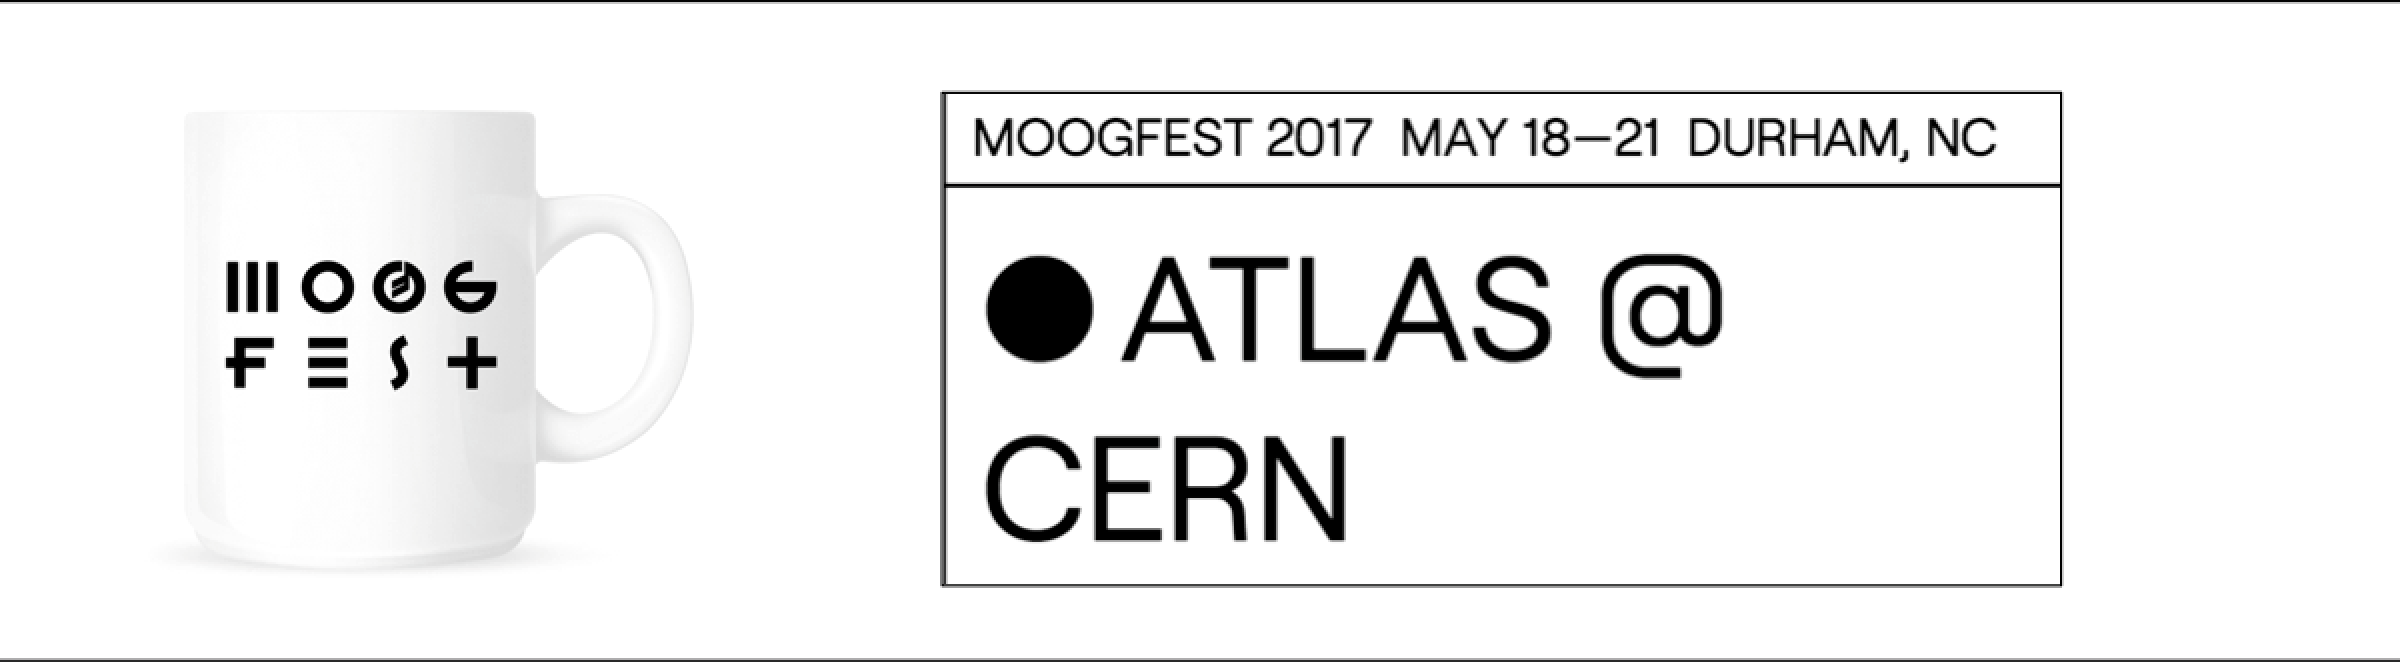 https://atlasvirtualvisit.web.cern.ch/sites/atlasvirtualvisit.web.cern.ch/files/Next-Moogfest.png